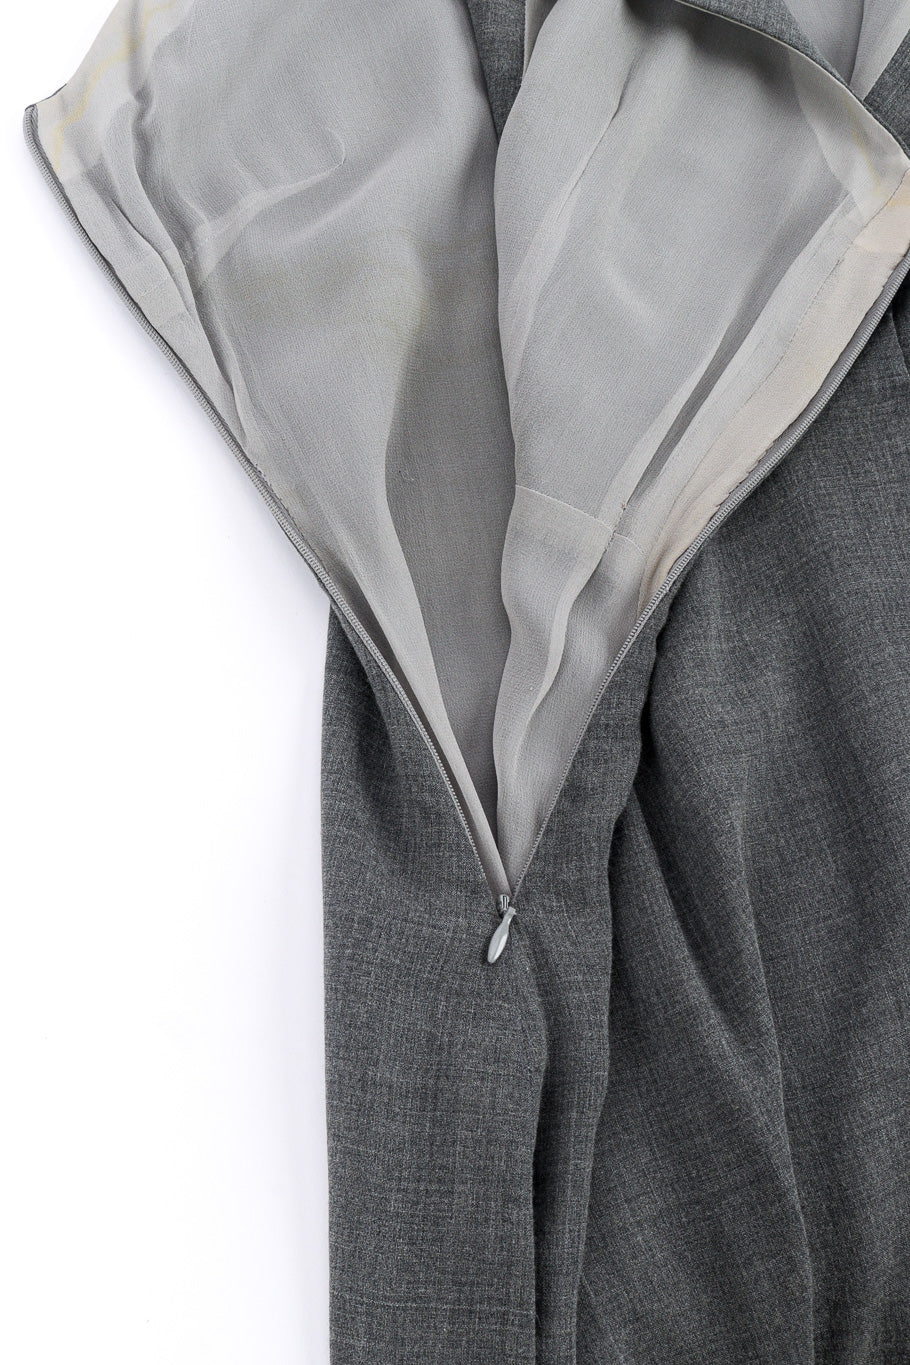 Vintage Richard Tyler Pleated Blazer and Dress Set zipper closure closeup @recessla